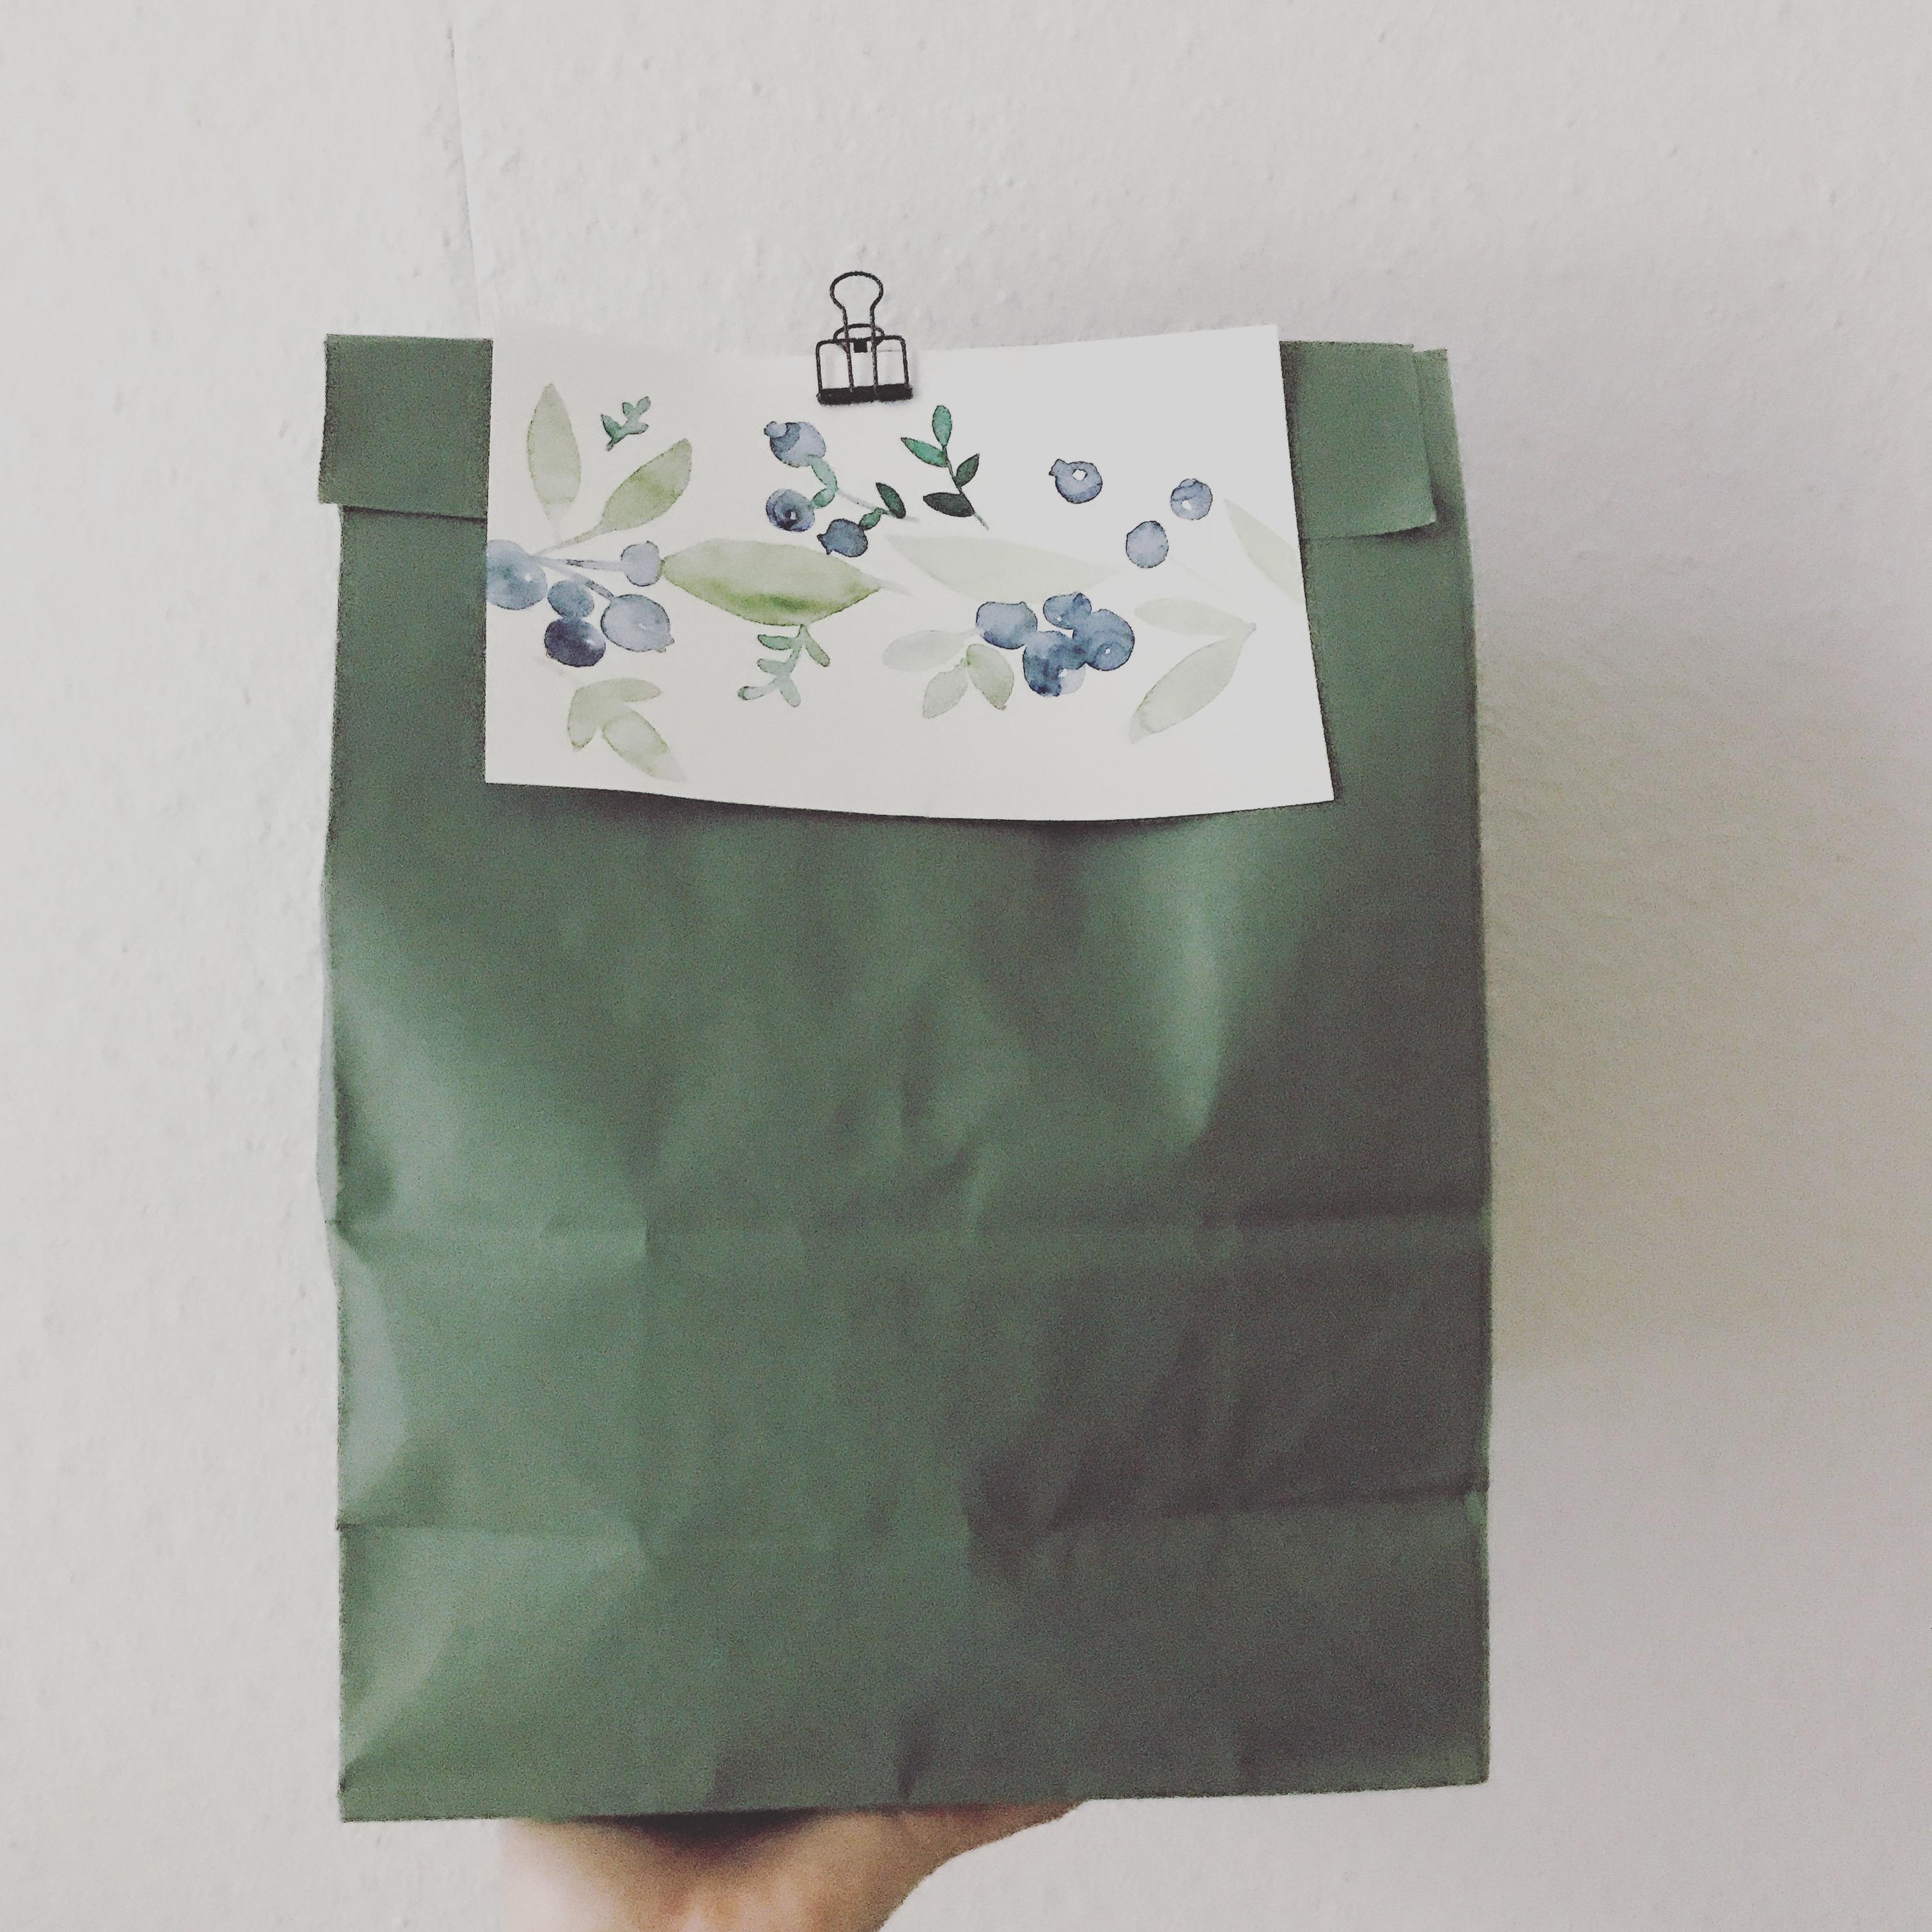 geschenke verpacken ist doch das schönste #geschenkeverpacken #giftwrapping #aquarell #diy